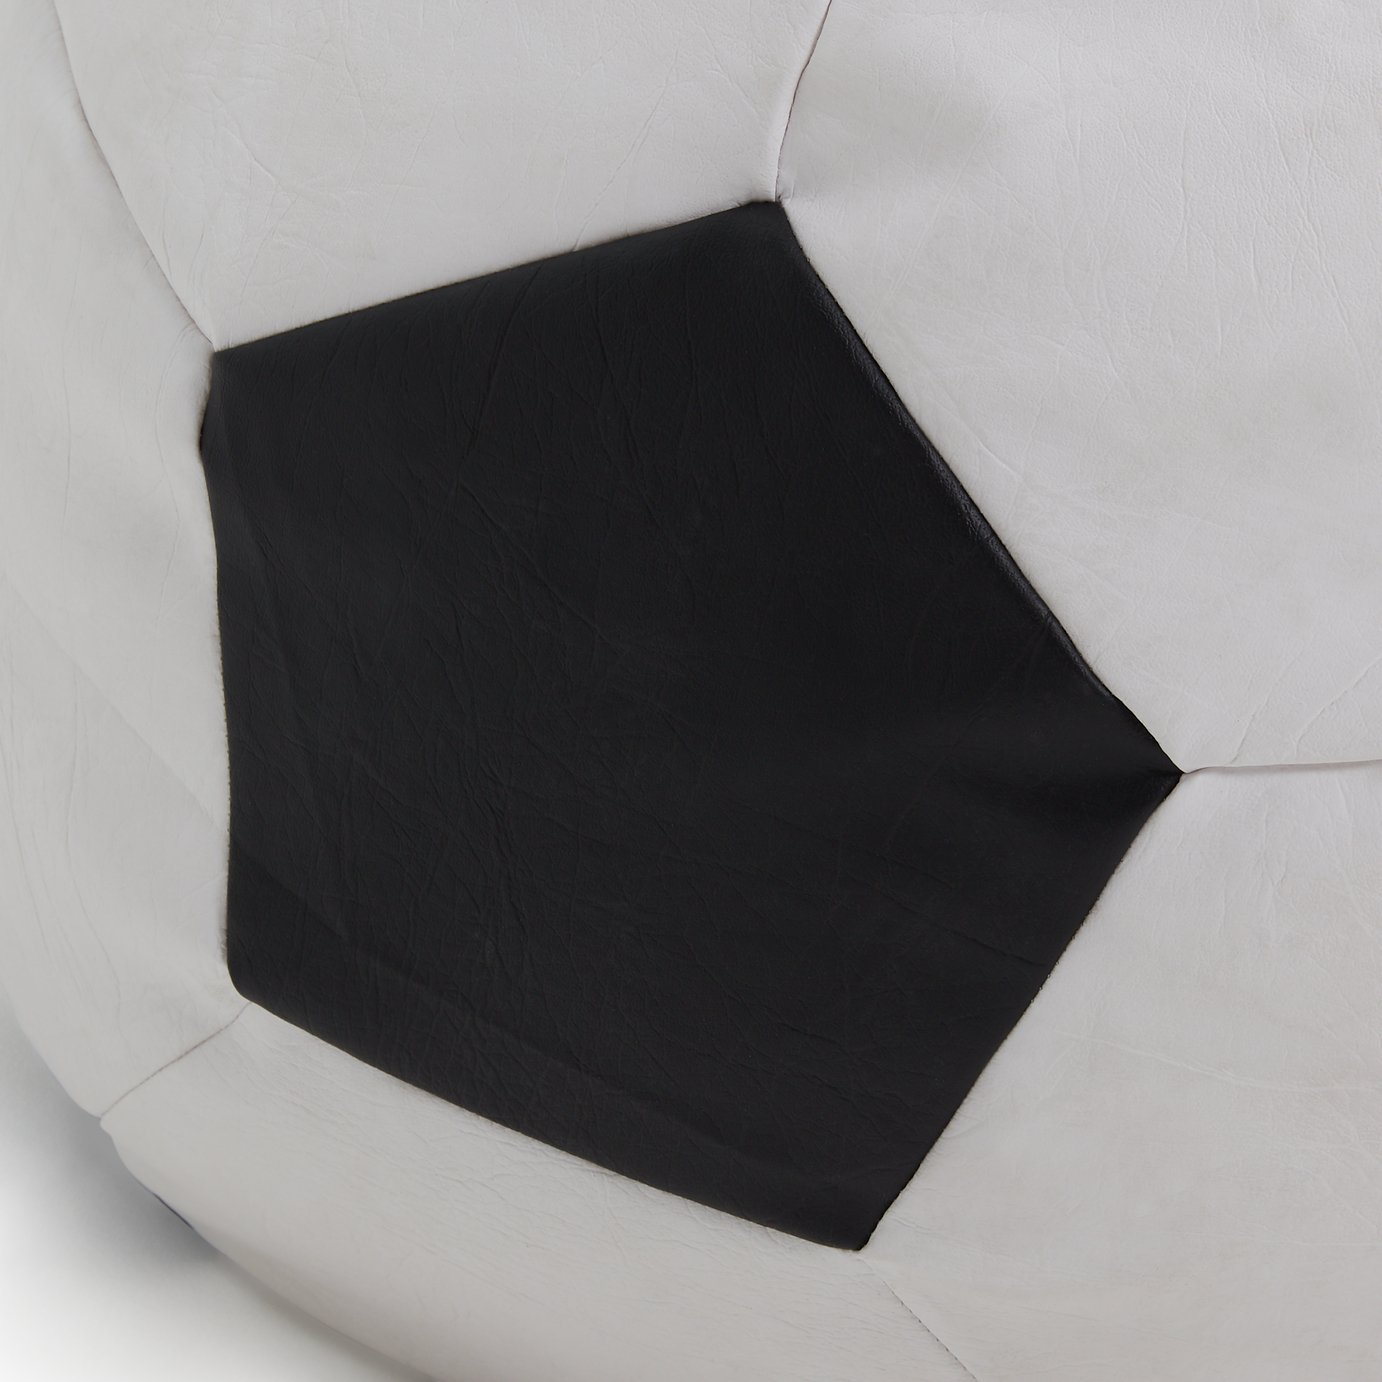 Argos Home XL Faux Leather Black & White Football Bean Bag Review